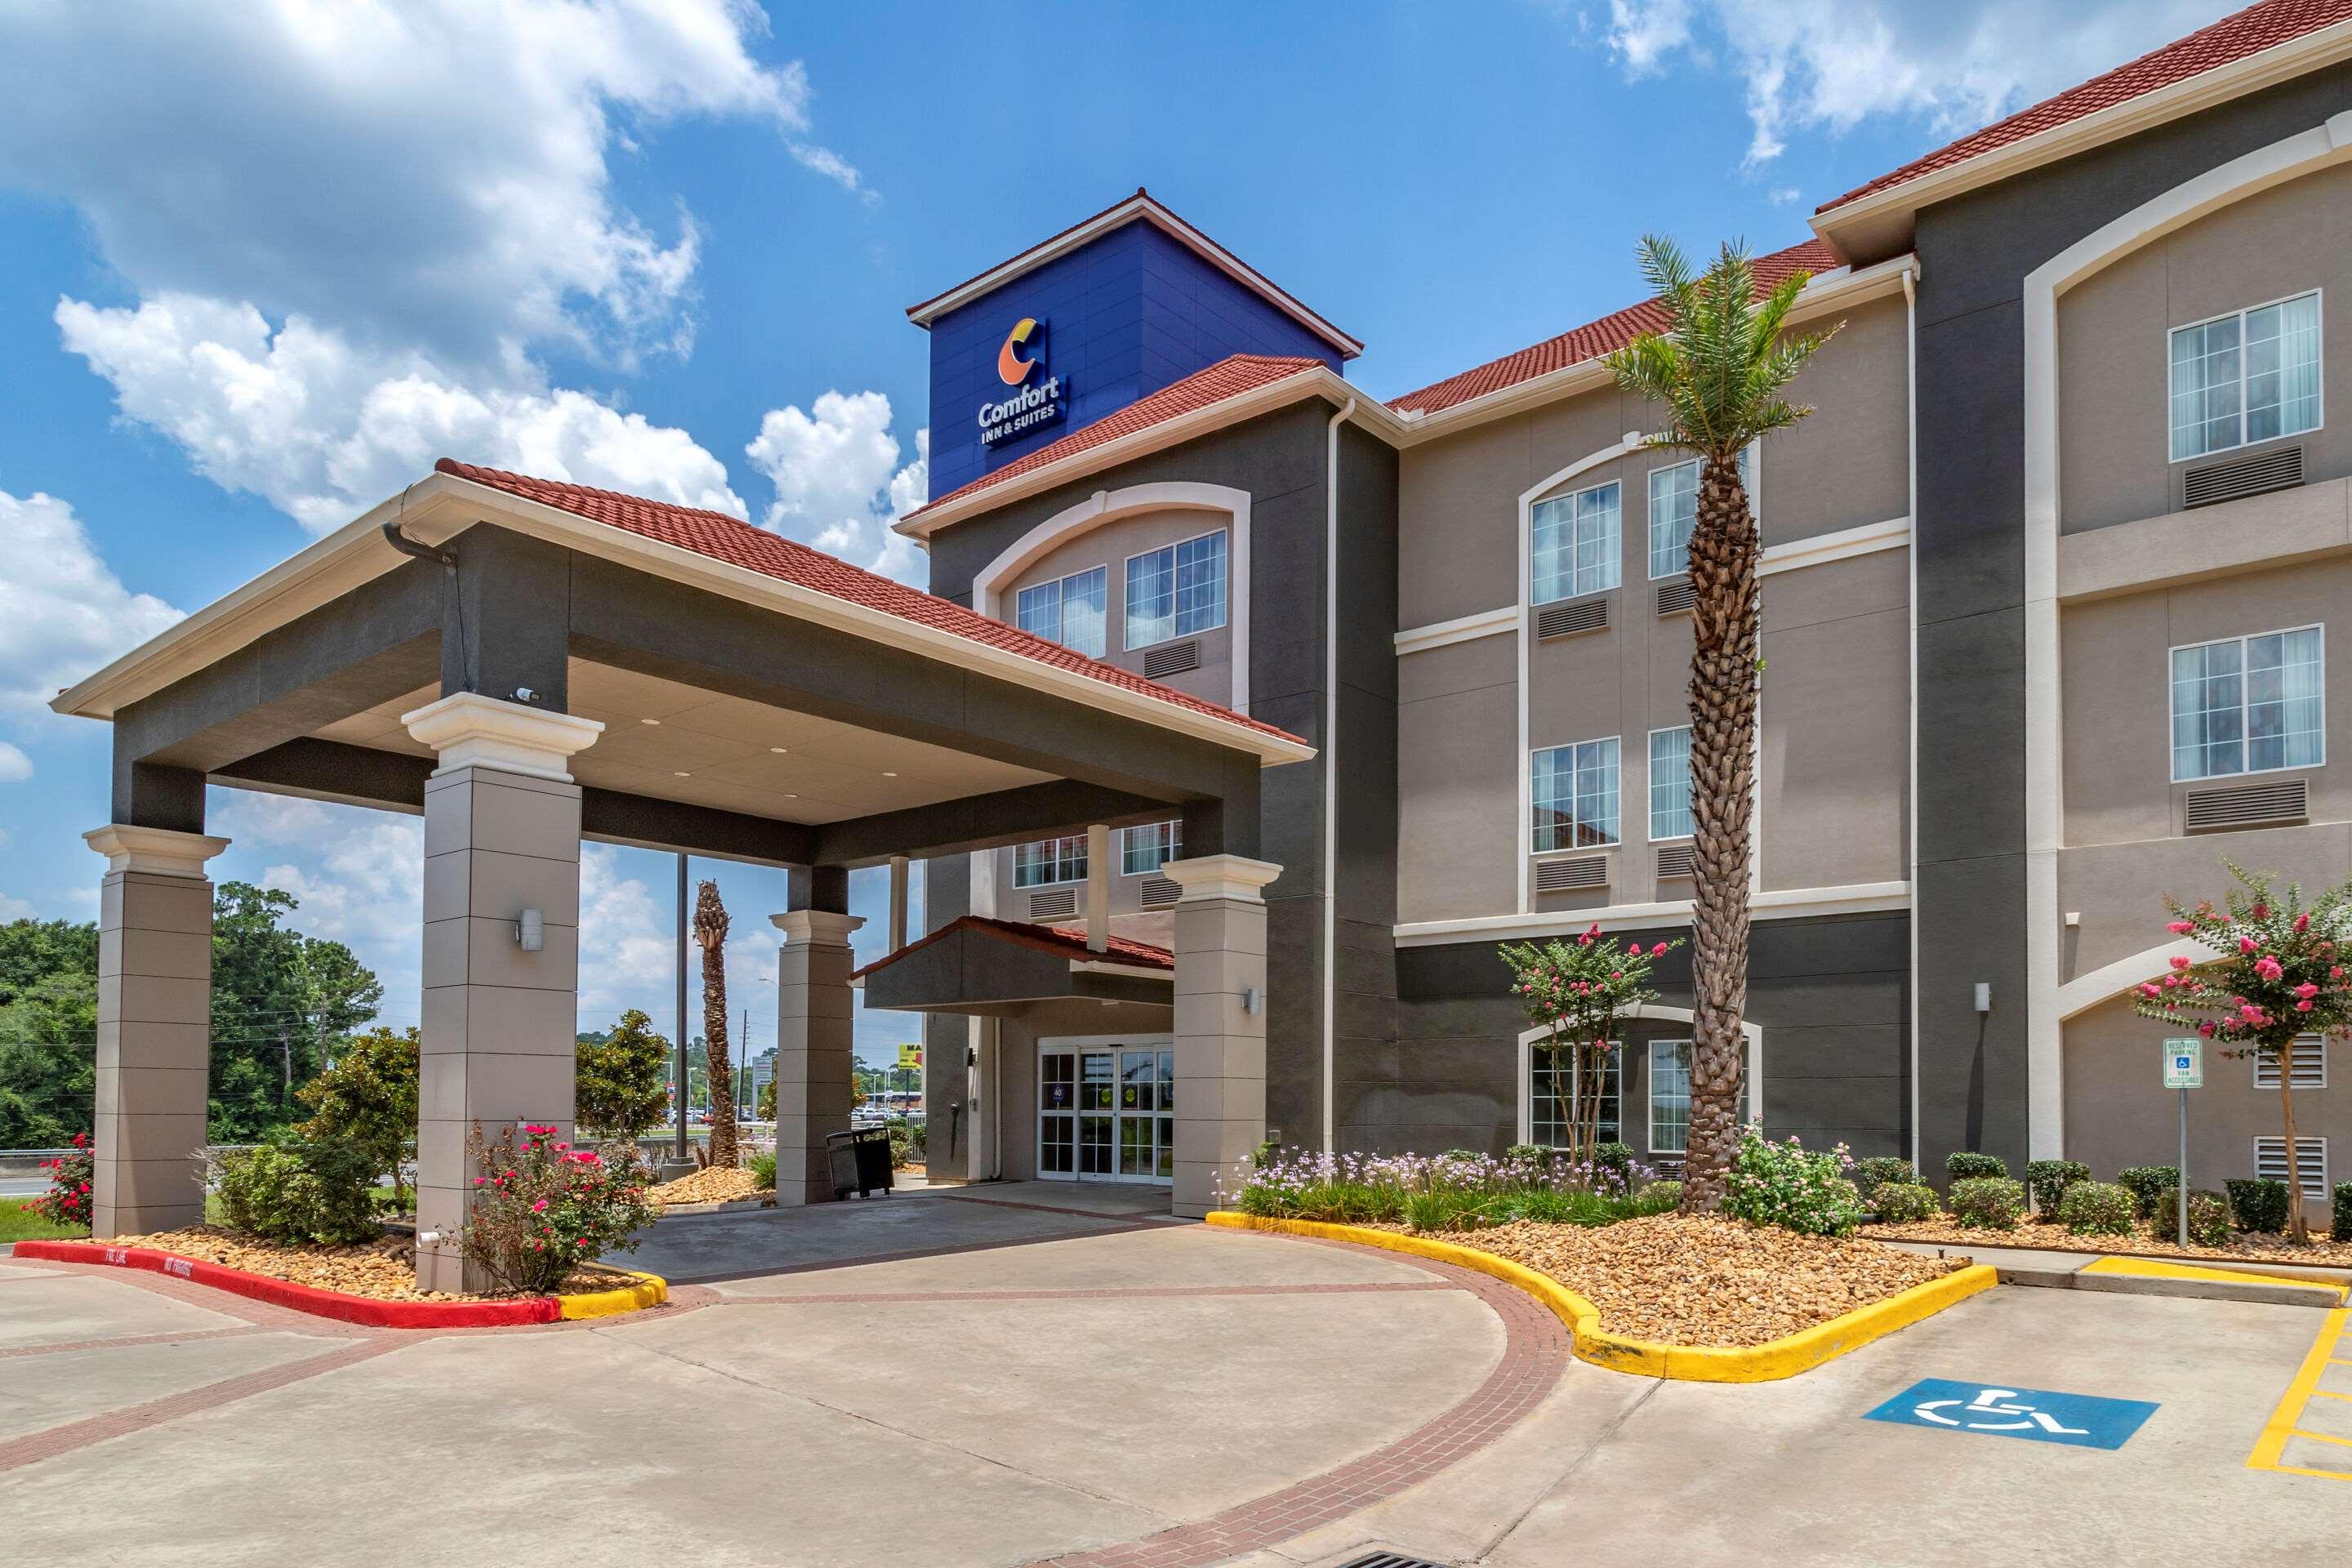 La Quinta Inn & Suites by Wyndham Cleveland TX image